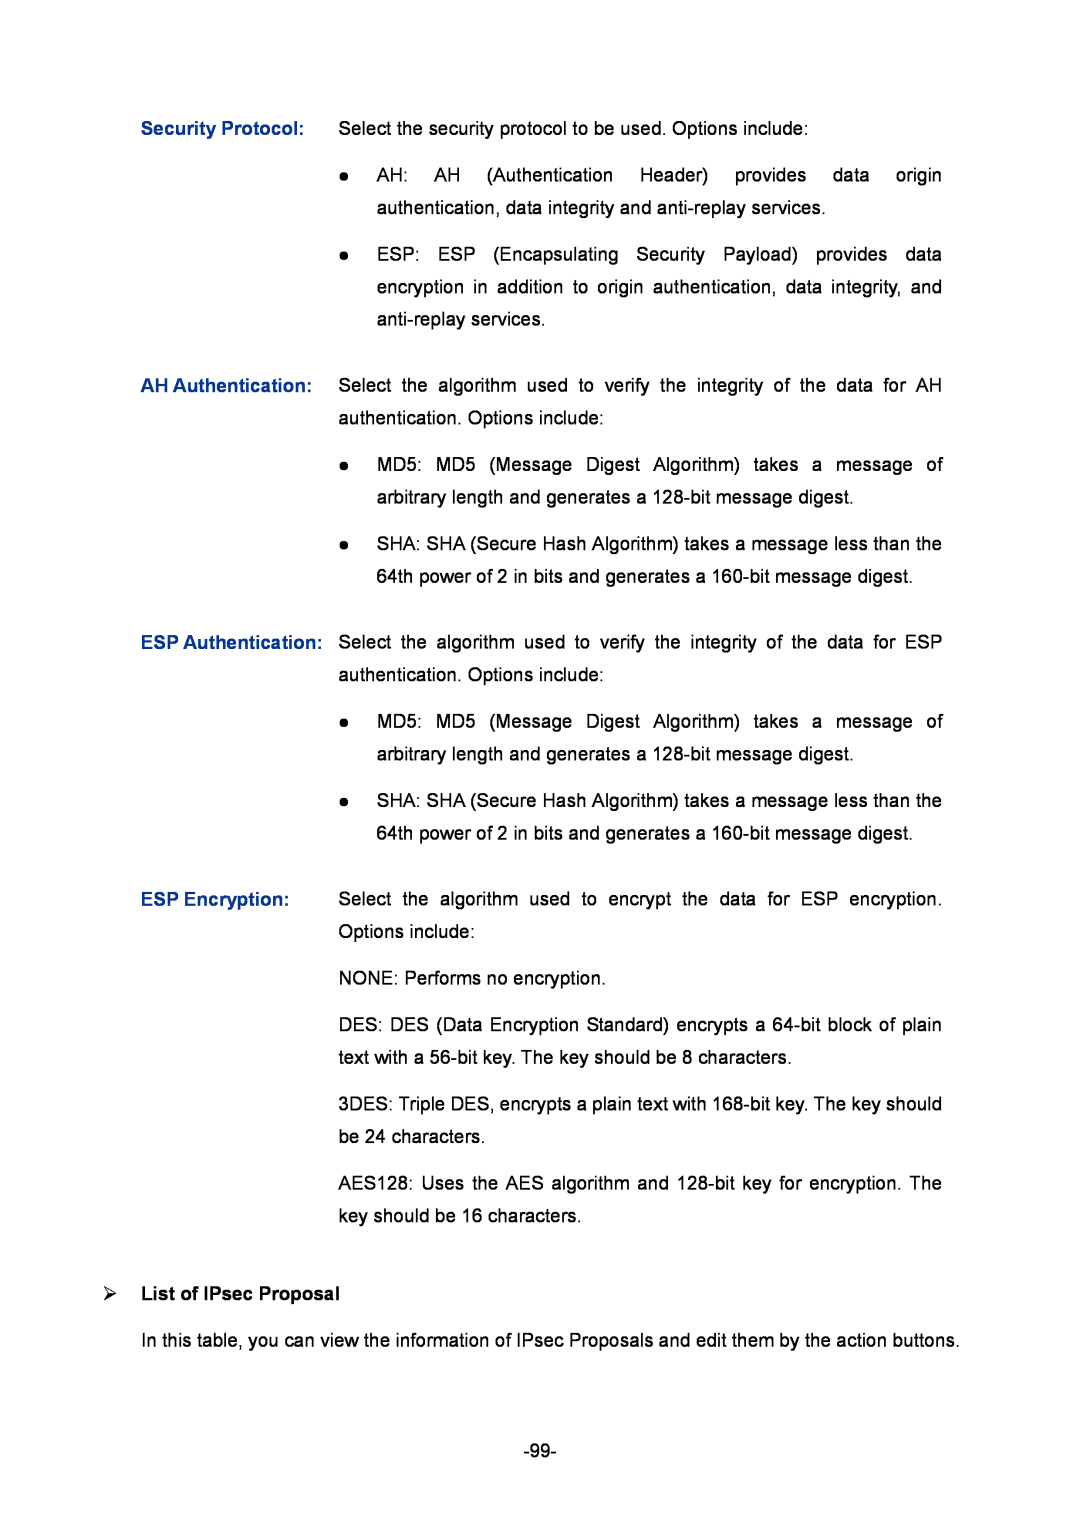 TP-Link TL-ER604W manual  List of IPsec Proposal 